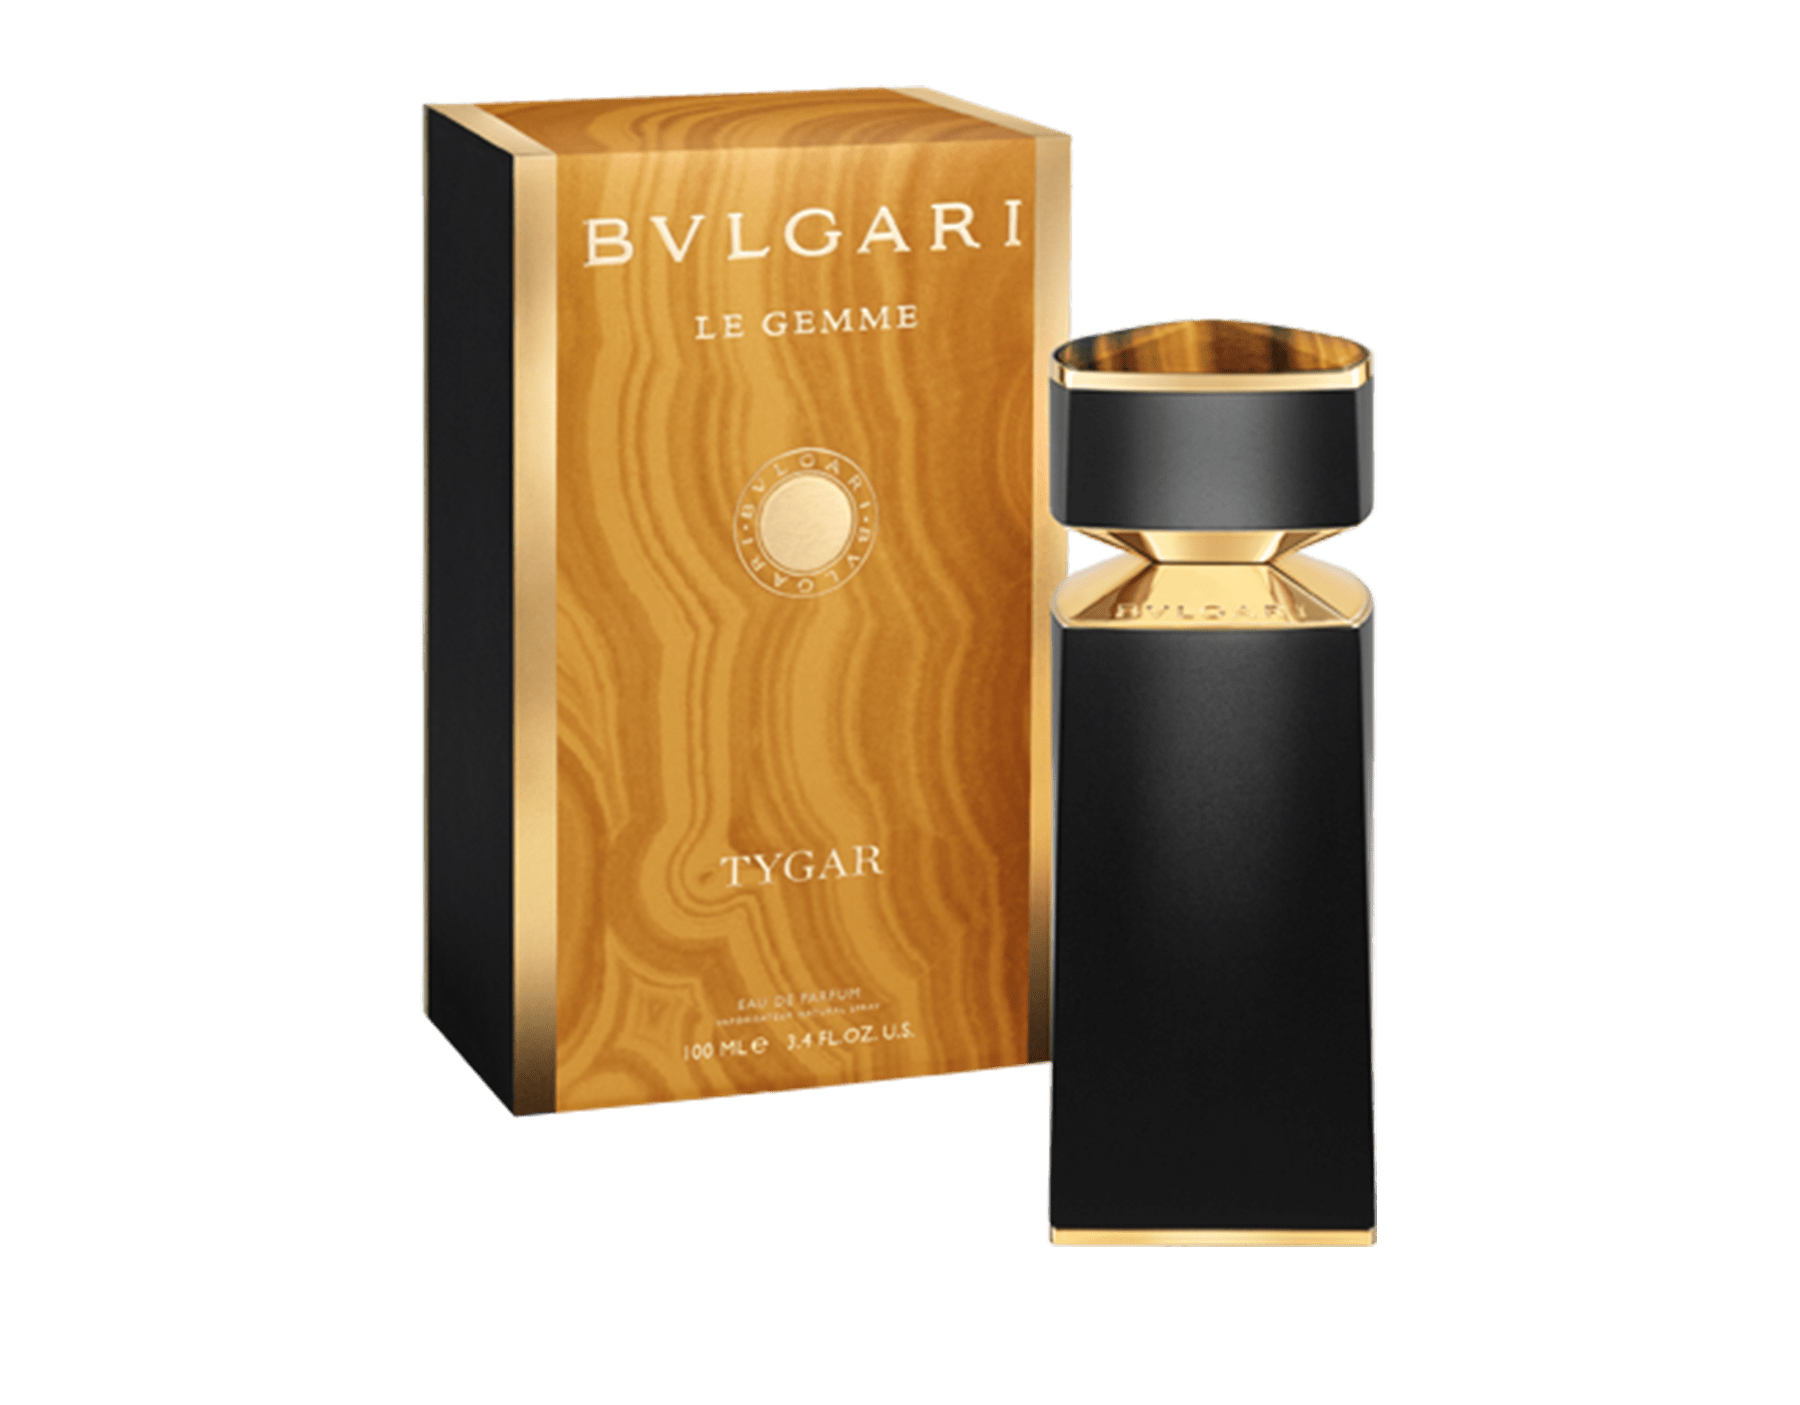 bvlgari fragrance